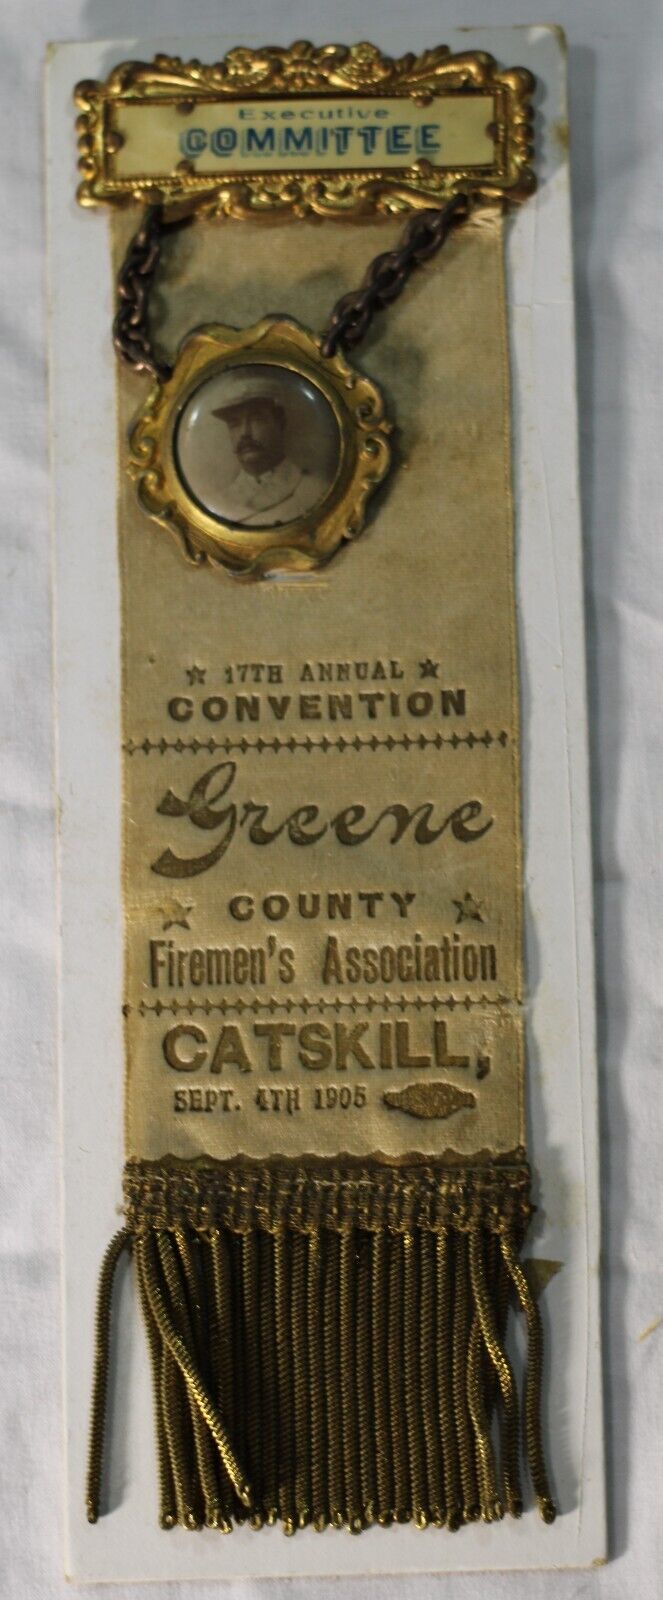 Vintage 1905 Firemen's Association Medal - Greene County Catskill Executive Comm